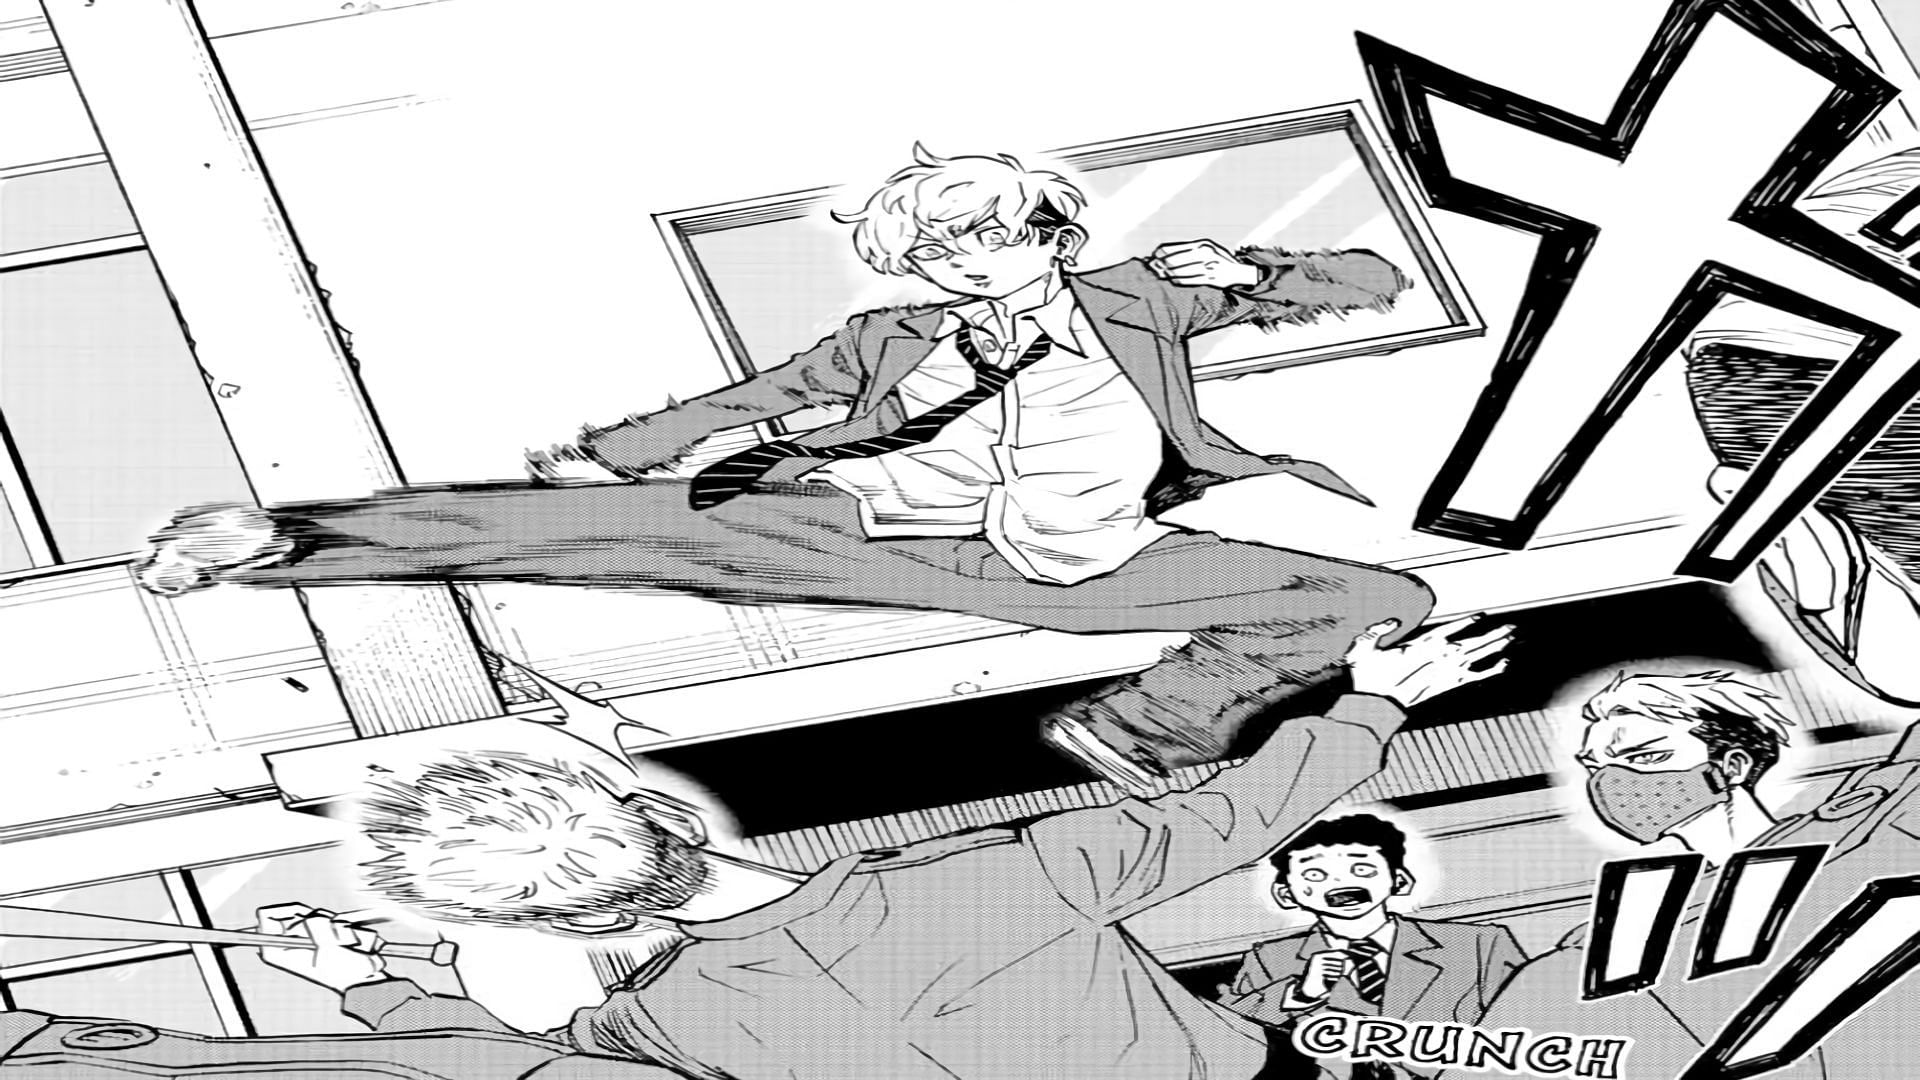 Chifuyu kicking his opponent in Tokyo Revengers spinoff chapter 5 (Image via Ken Wakui, Kodansha)